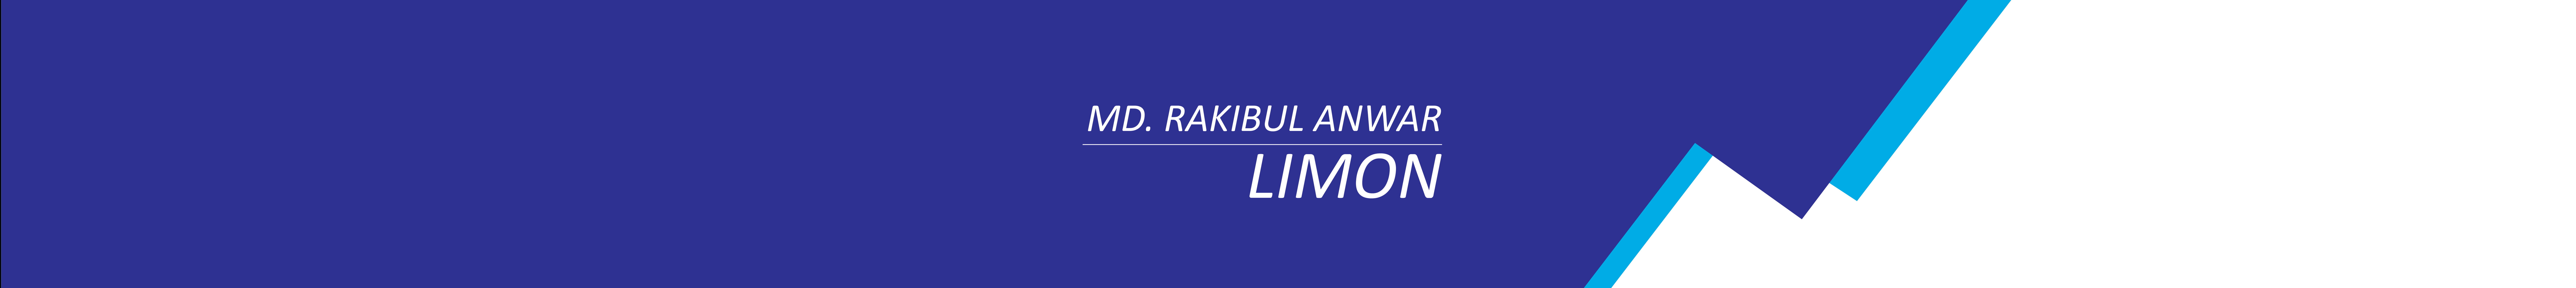 Banner de perfil de Md Rakibul Anwar (Limon)